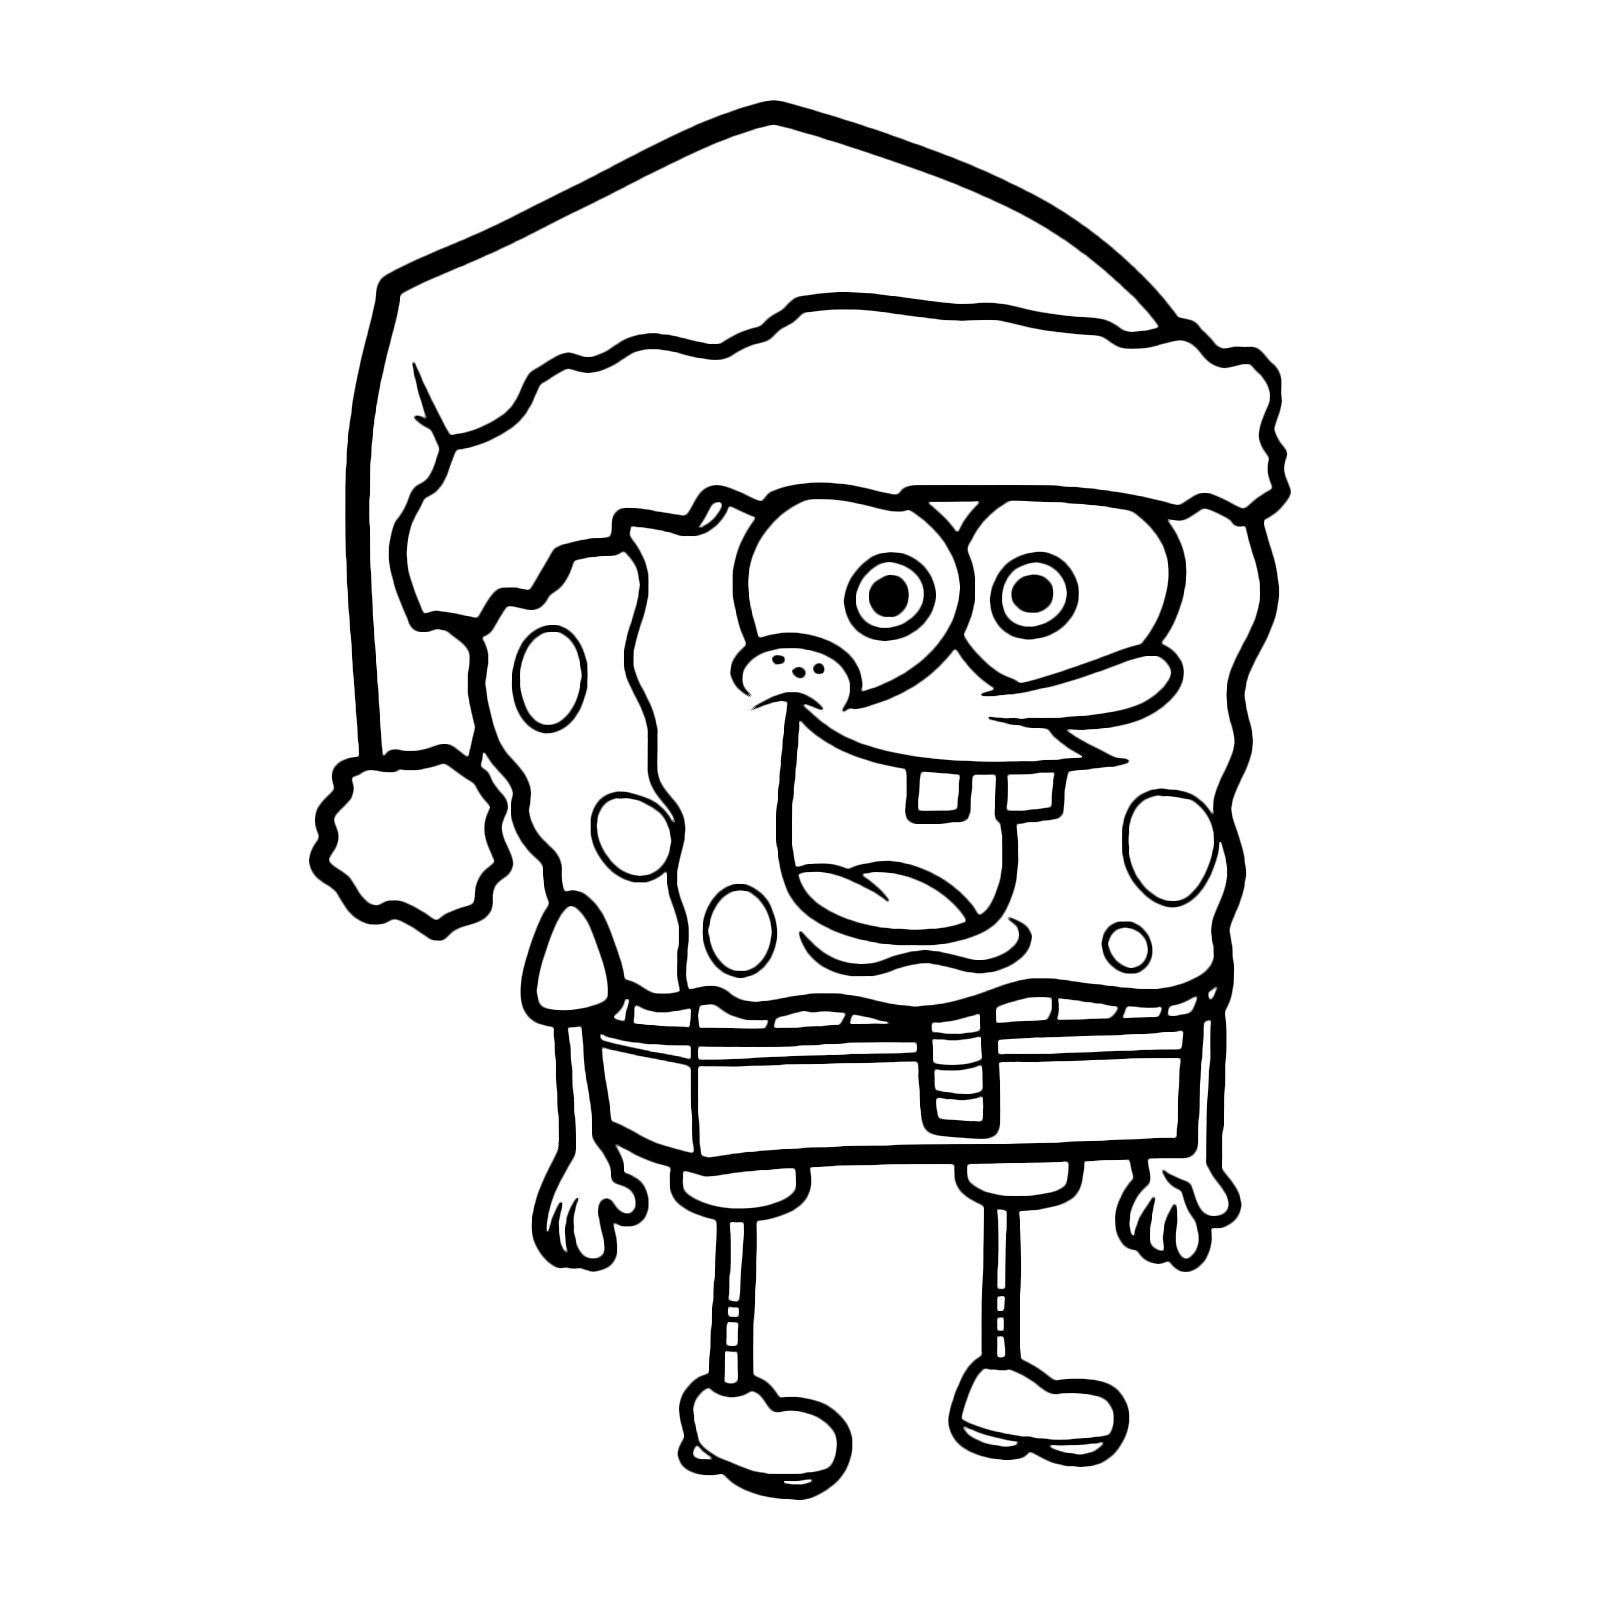 SpongeBob - SpongeBob with Santa Claus hat